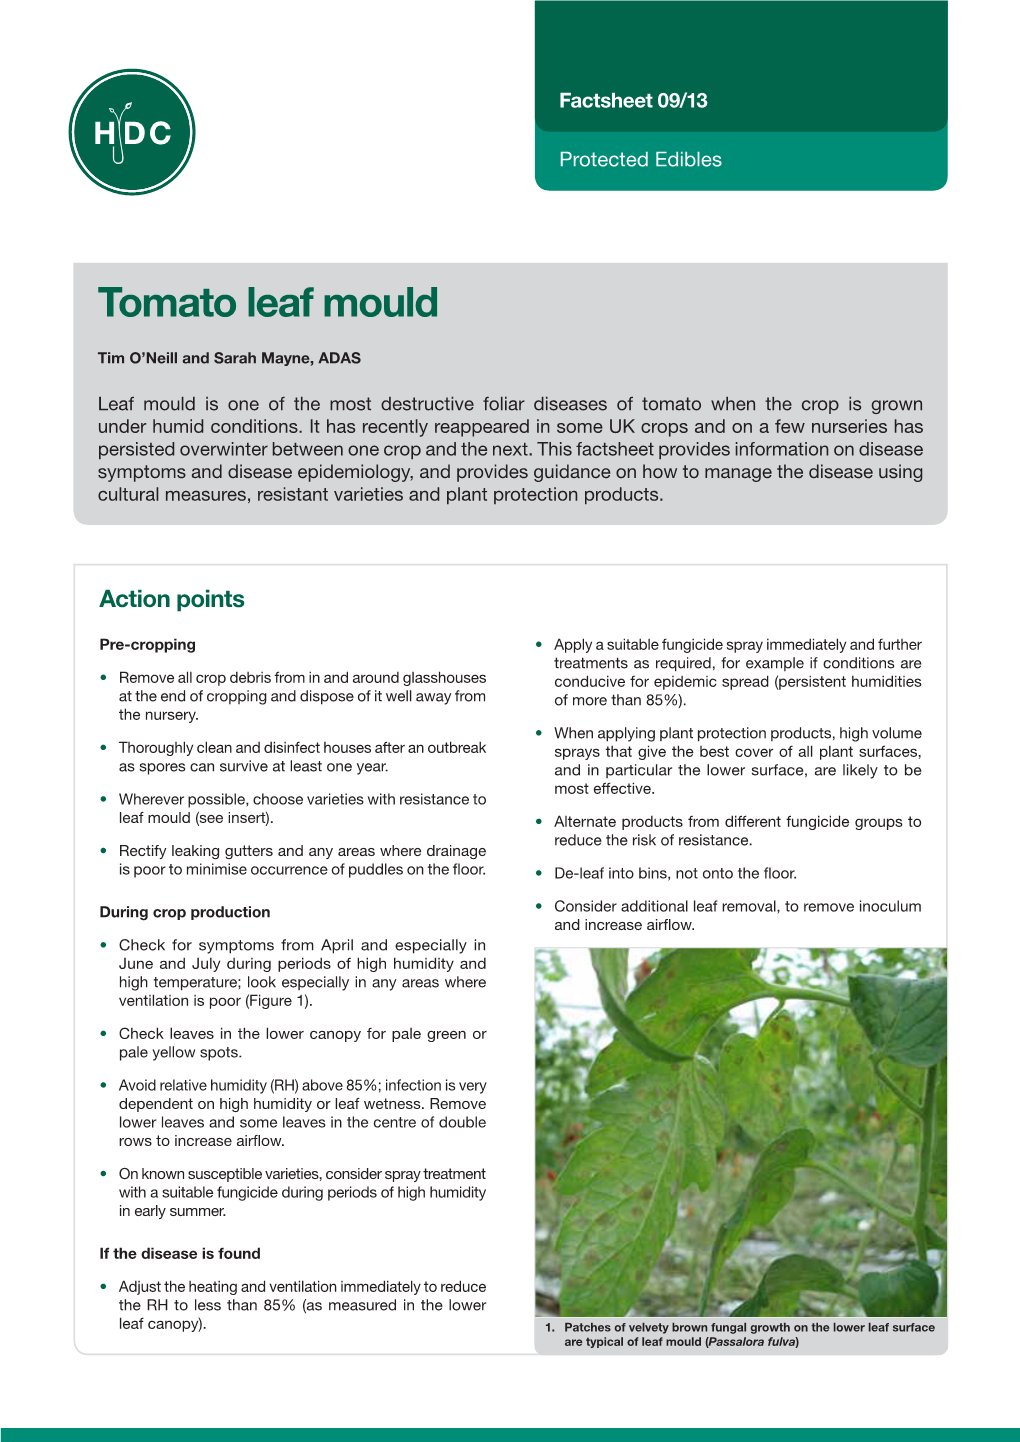 Tomato Leaf Mould